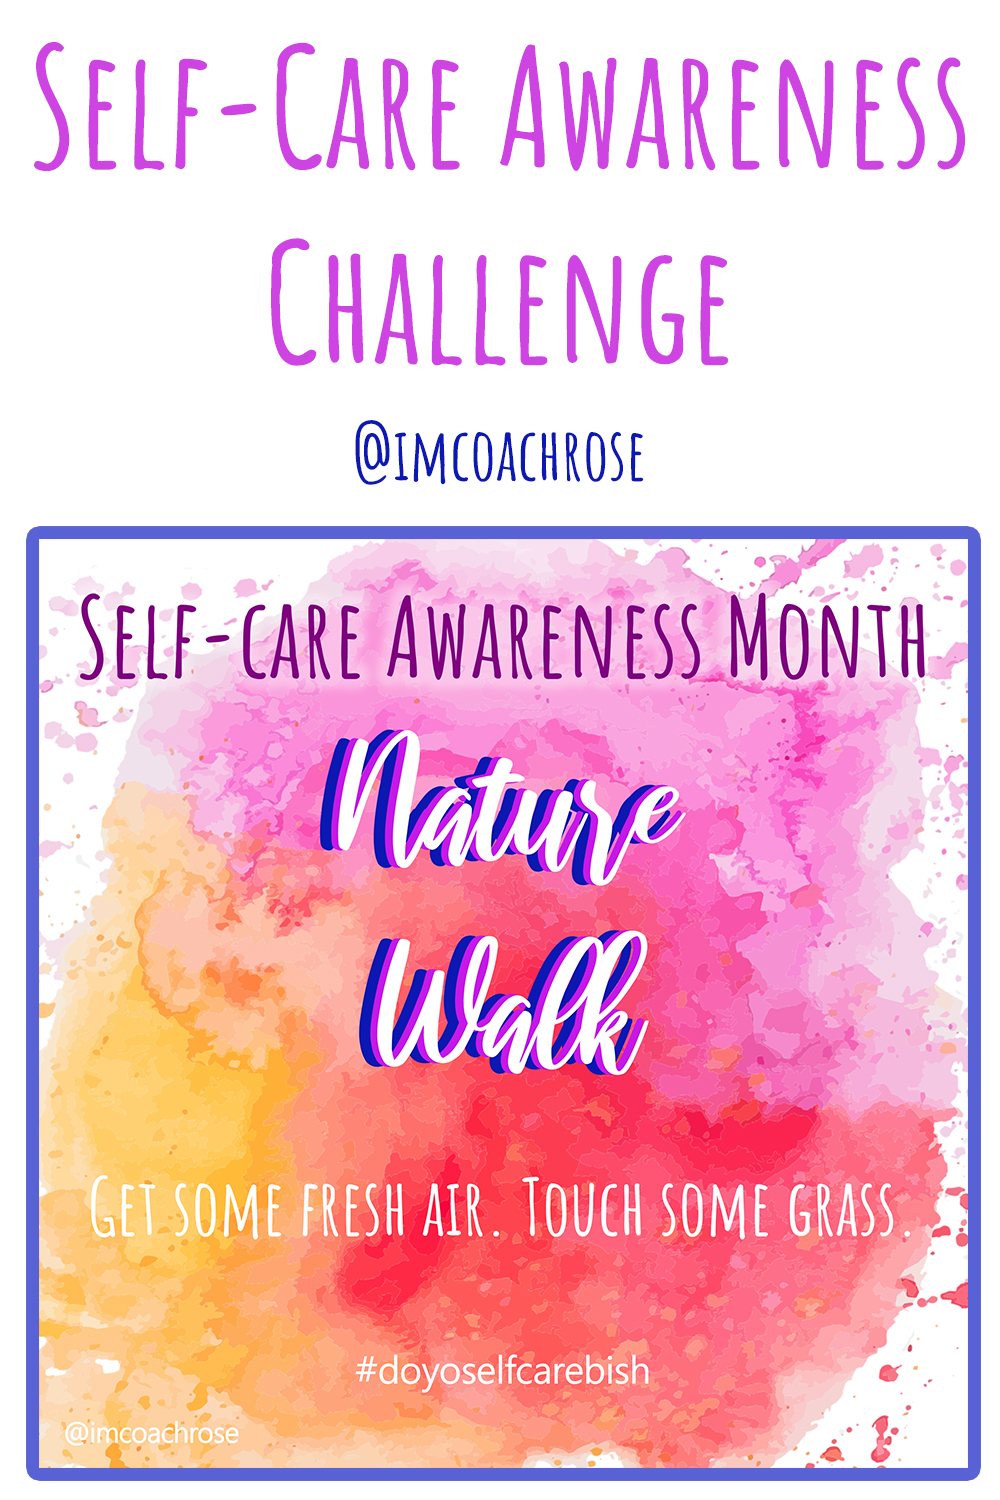 Self-Care Awareness Month: Nature Walk